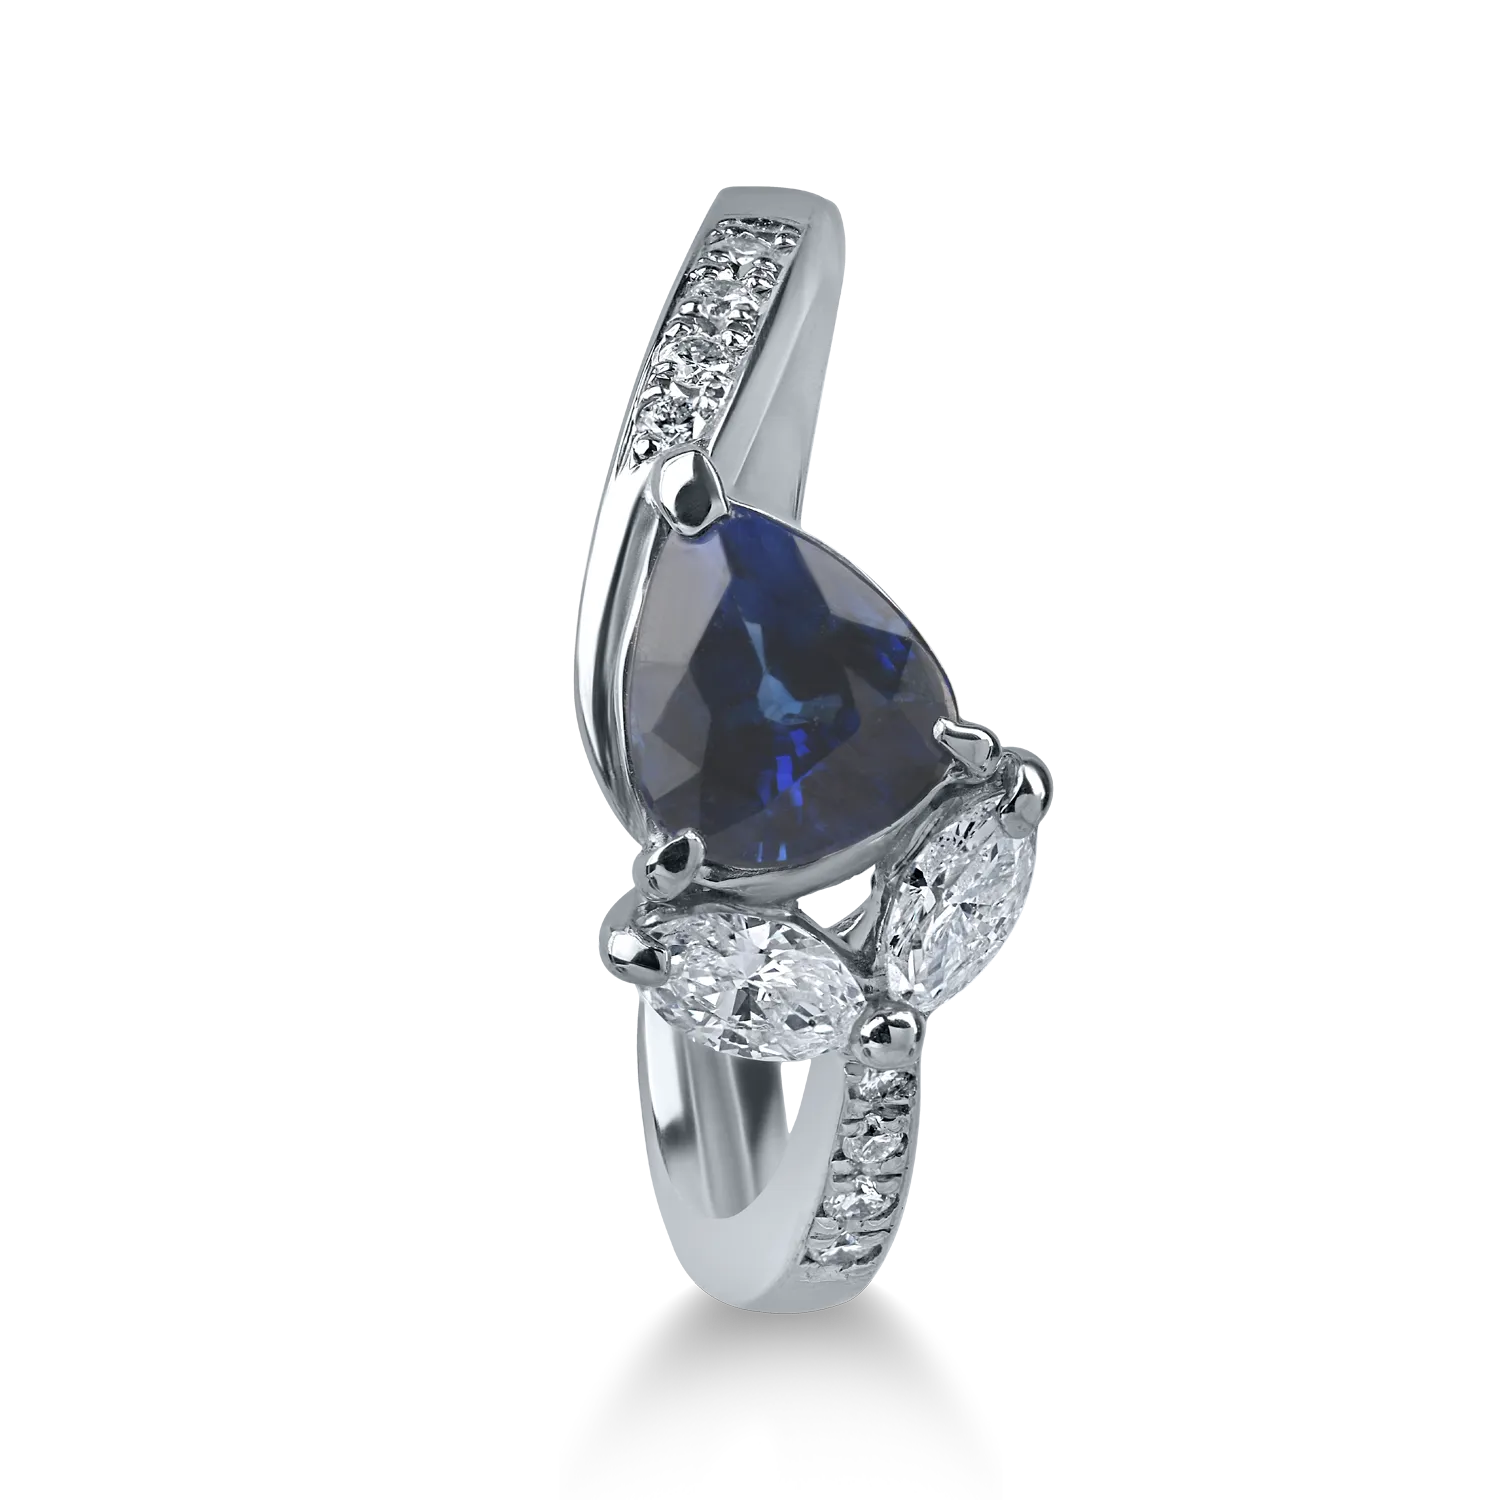 Platinum ring with 1ct sapphire and 0.3ct diamonds